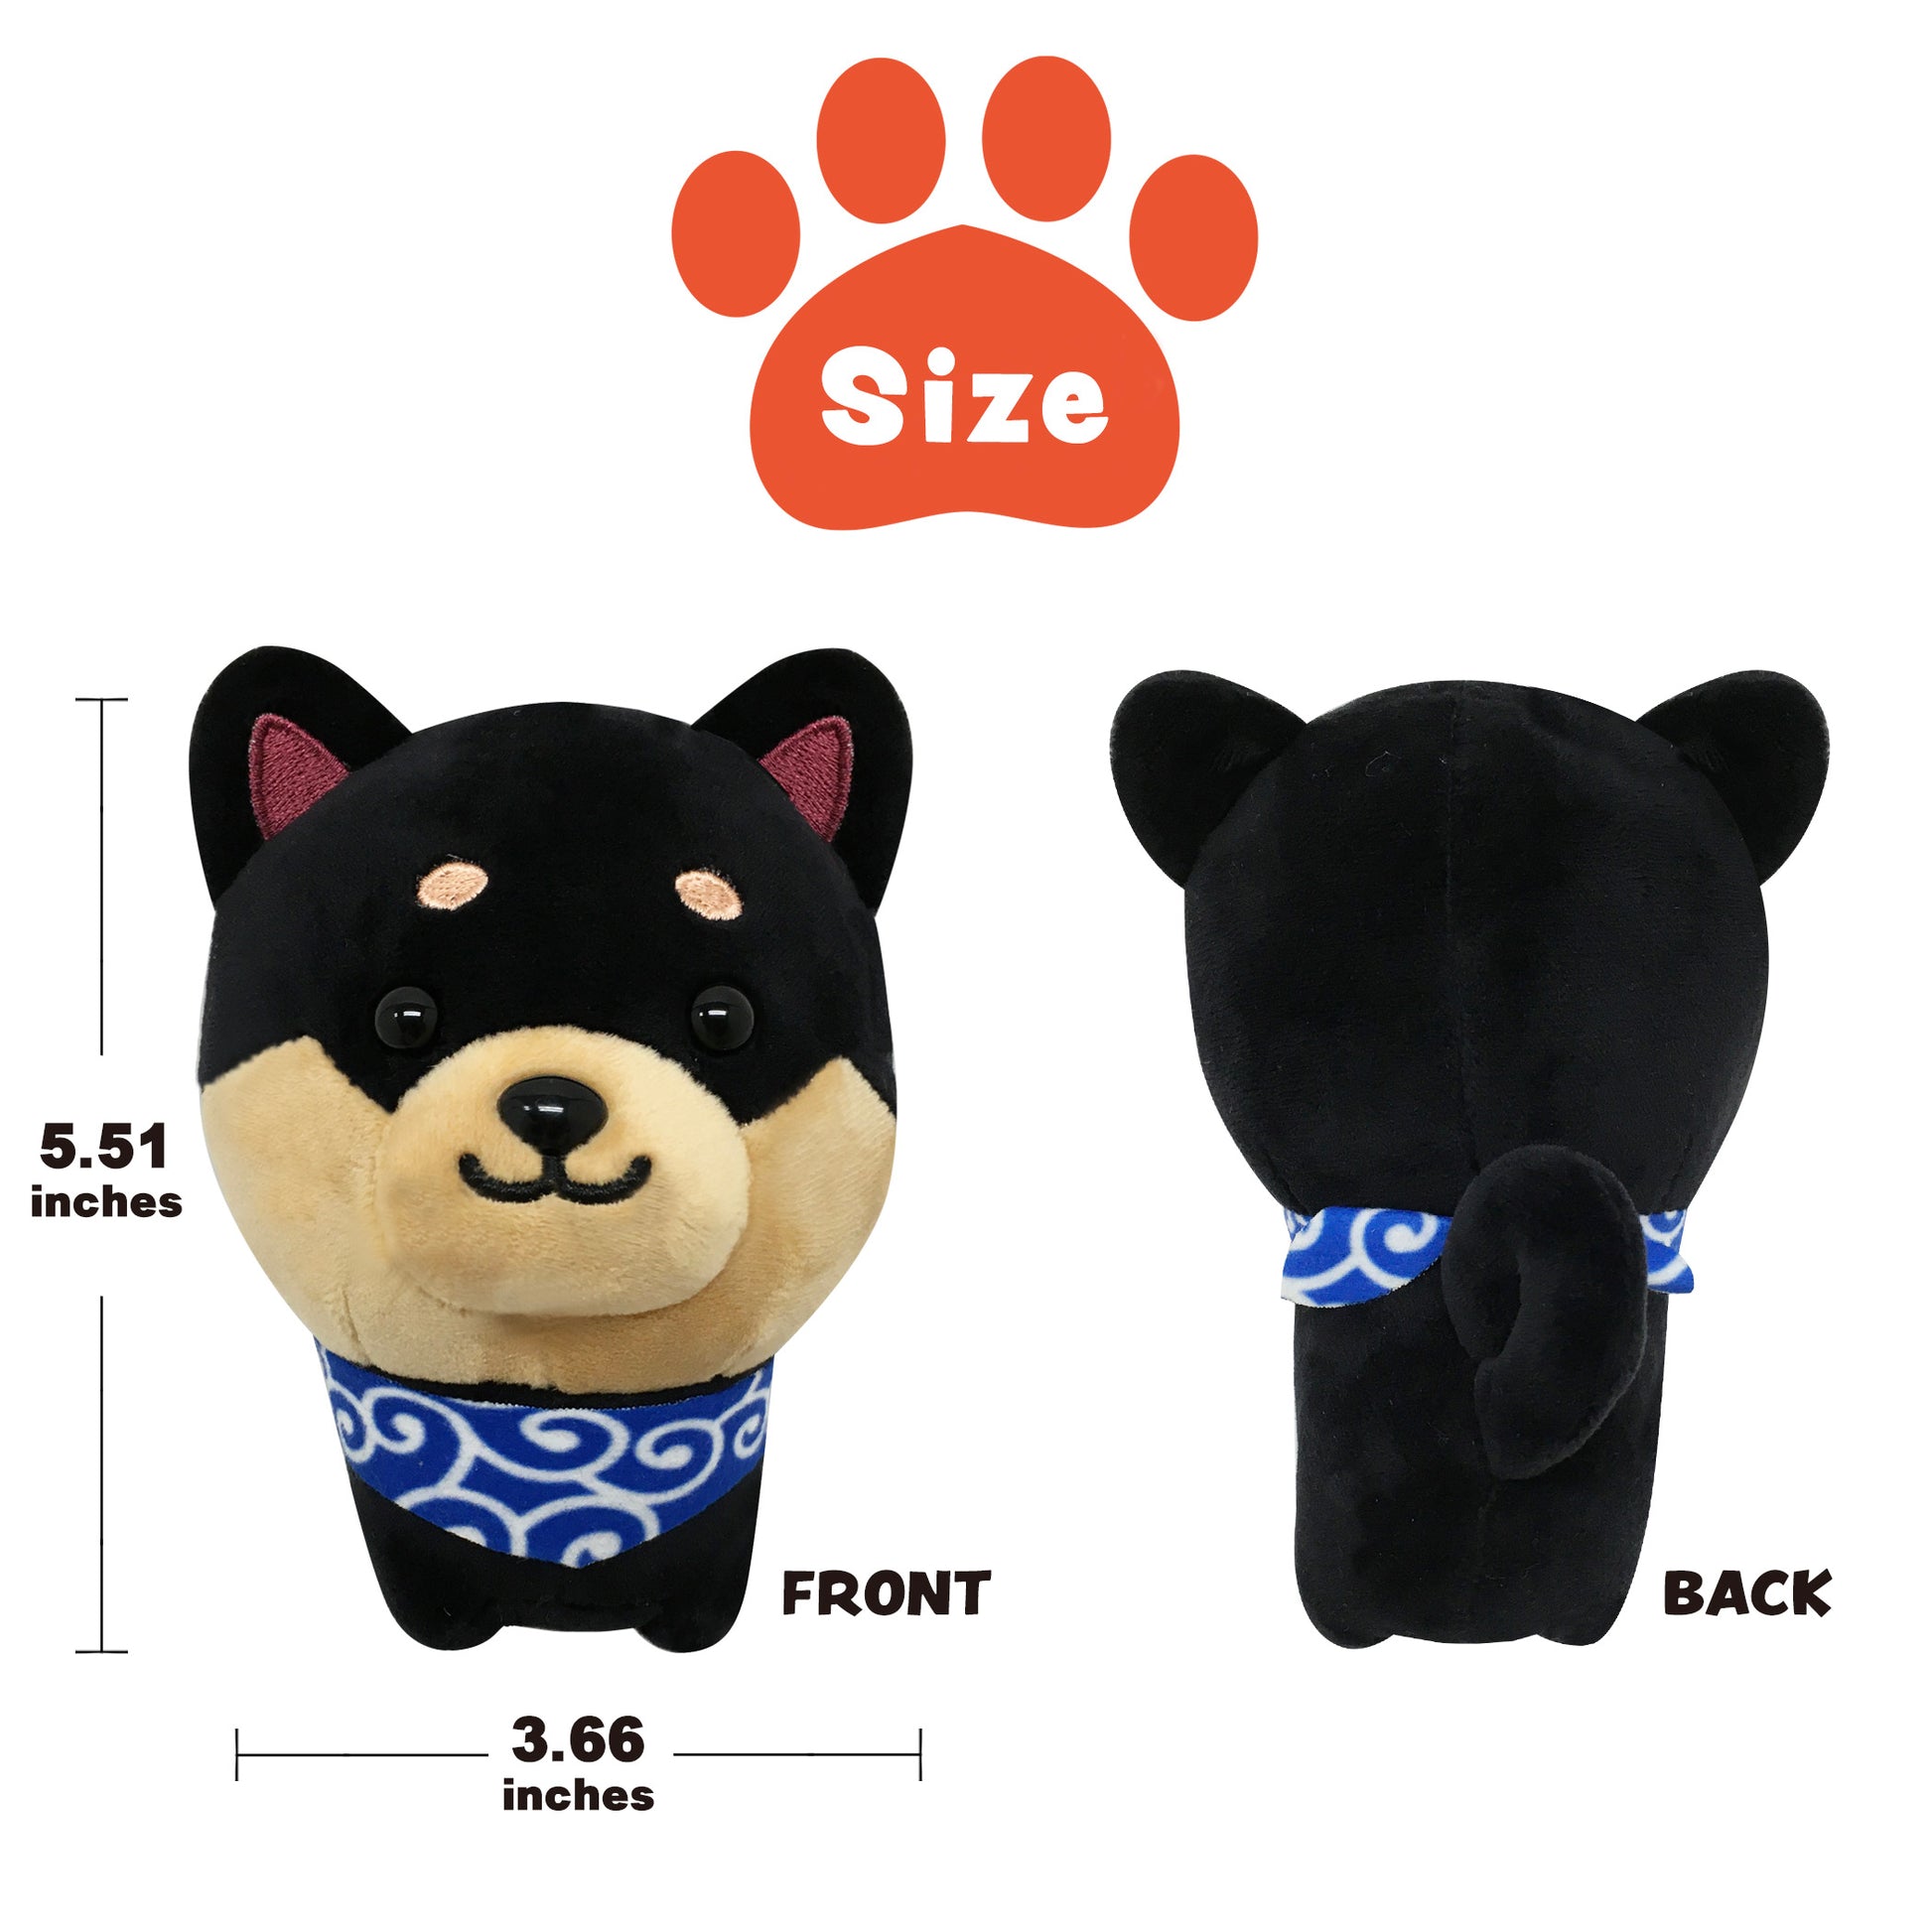 Size of stuffed dog Mameshiba black